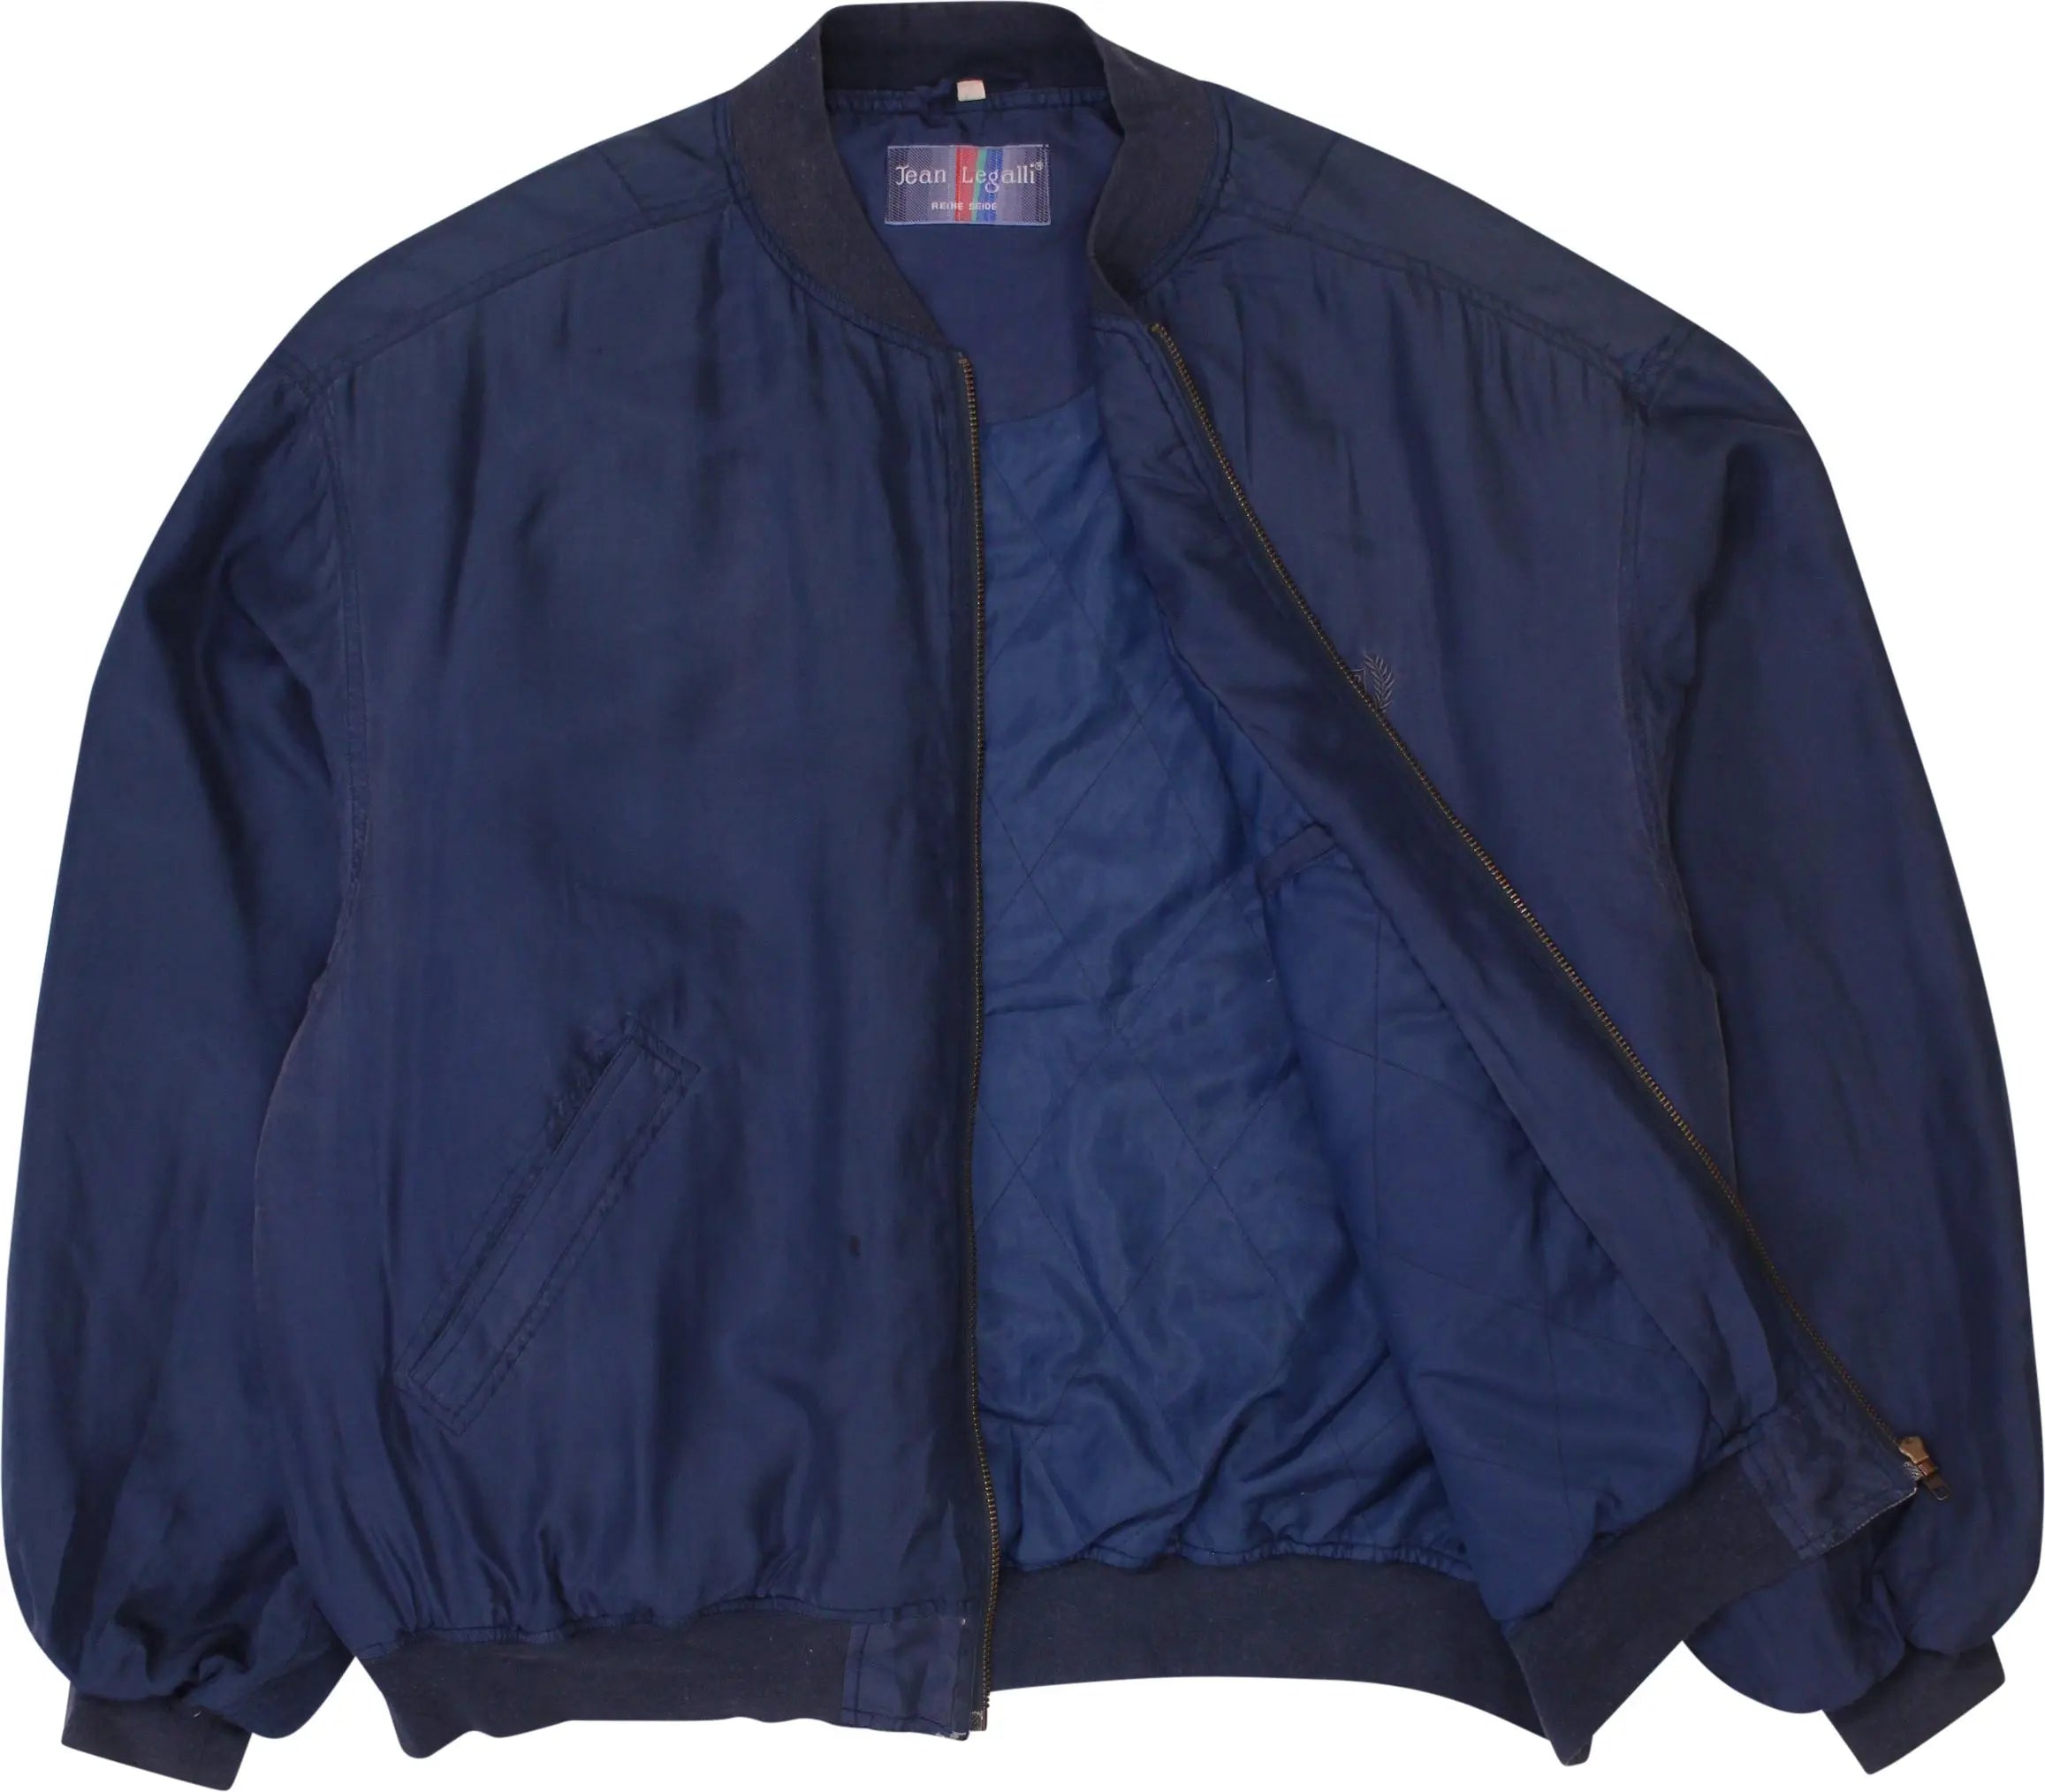 Jean Legalli - Vintage 100% Silk Bomber Jacket- ThriftTale.com - Vintage and second handclothing